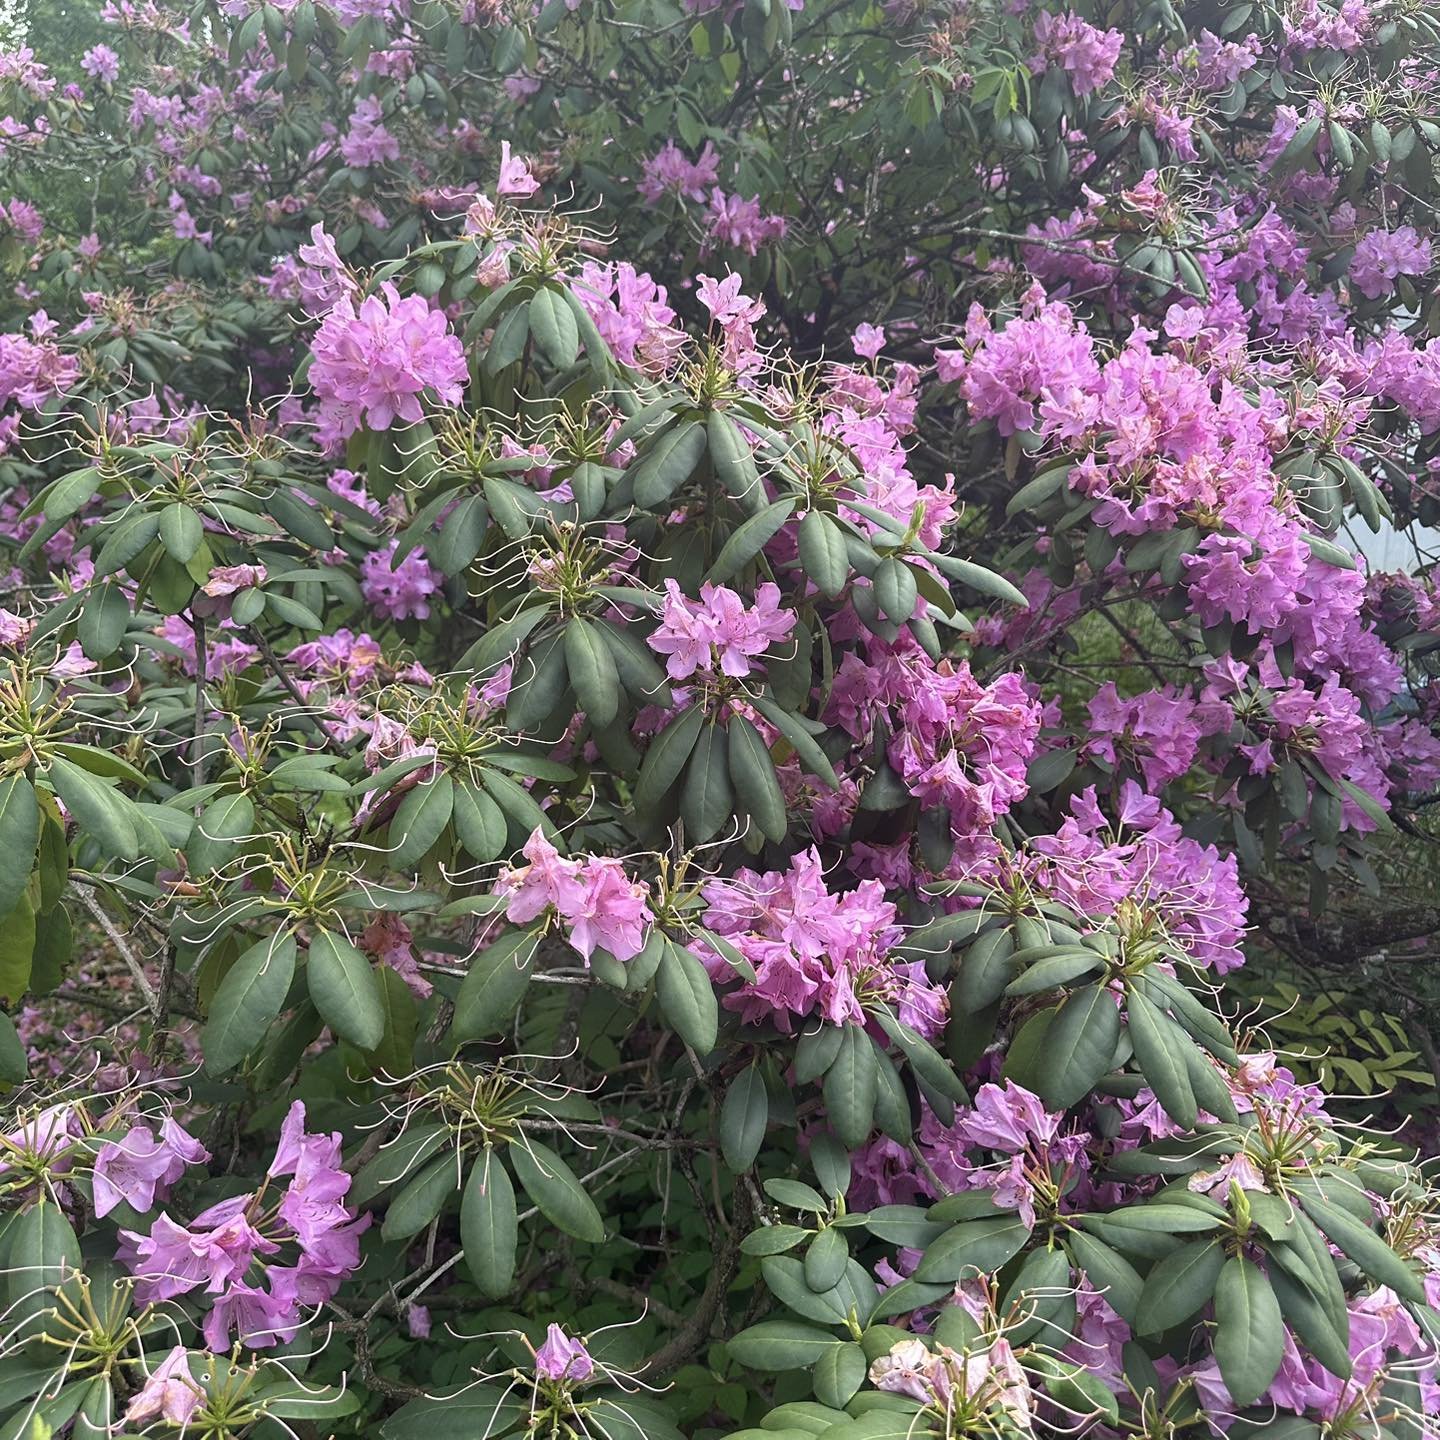 The Rhododendrons are blooming!  #farm #farmlife #flowers #flowerstagram #flowersofinstagram #spring